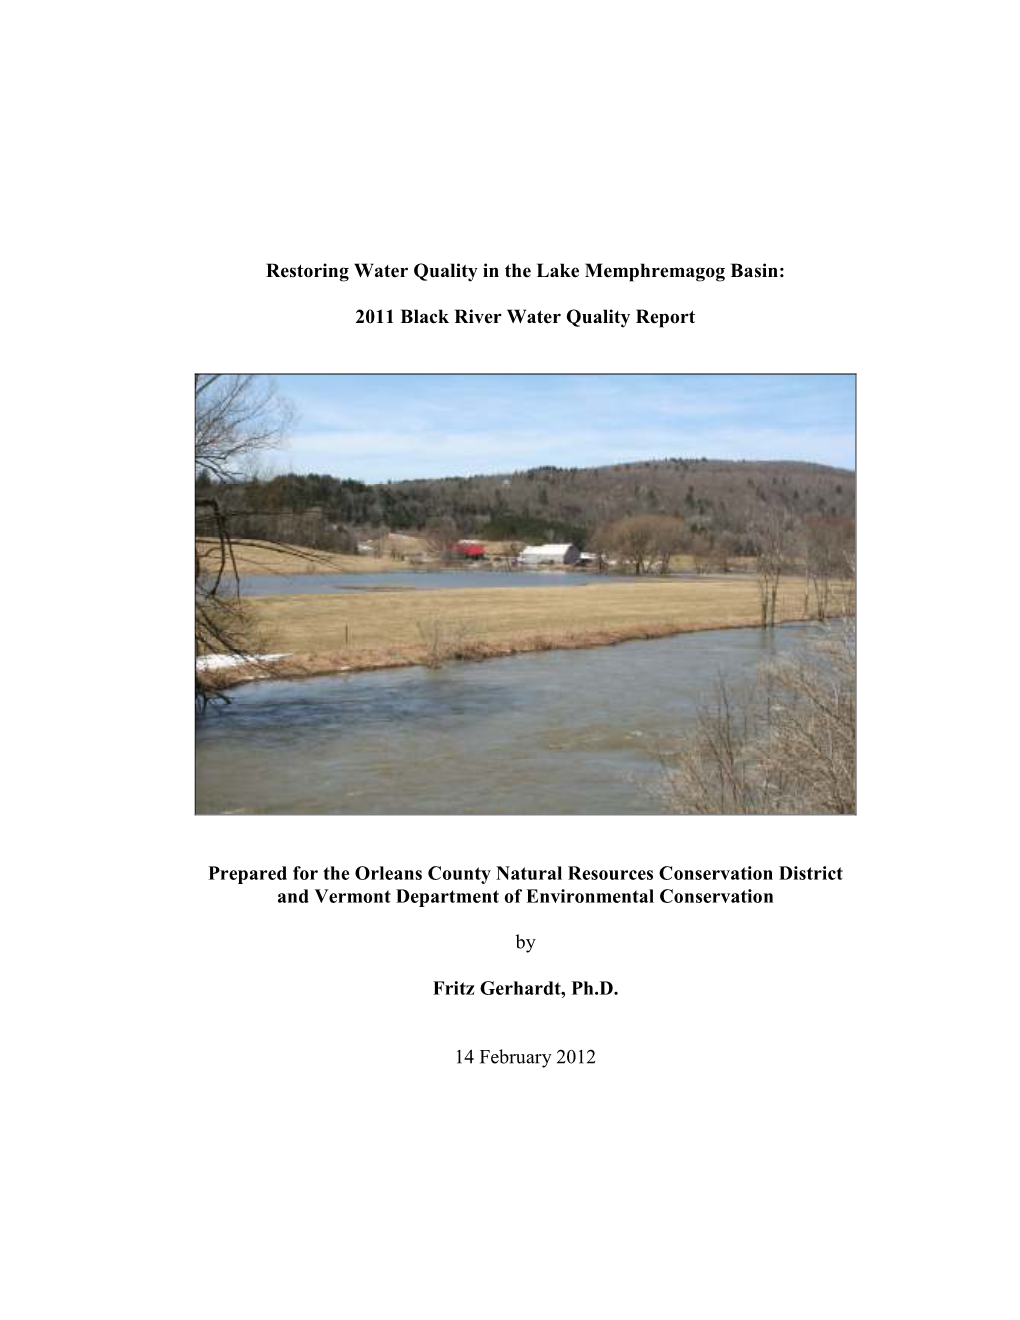 Restoring Water Quality in the Lake Memphremagog Basin: 2011 Black